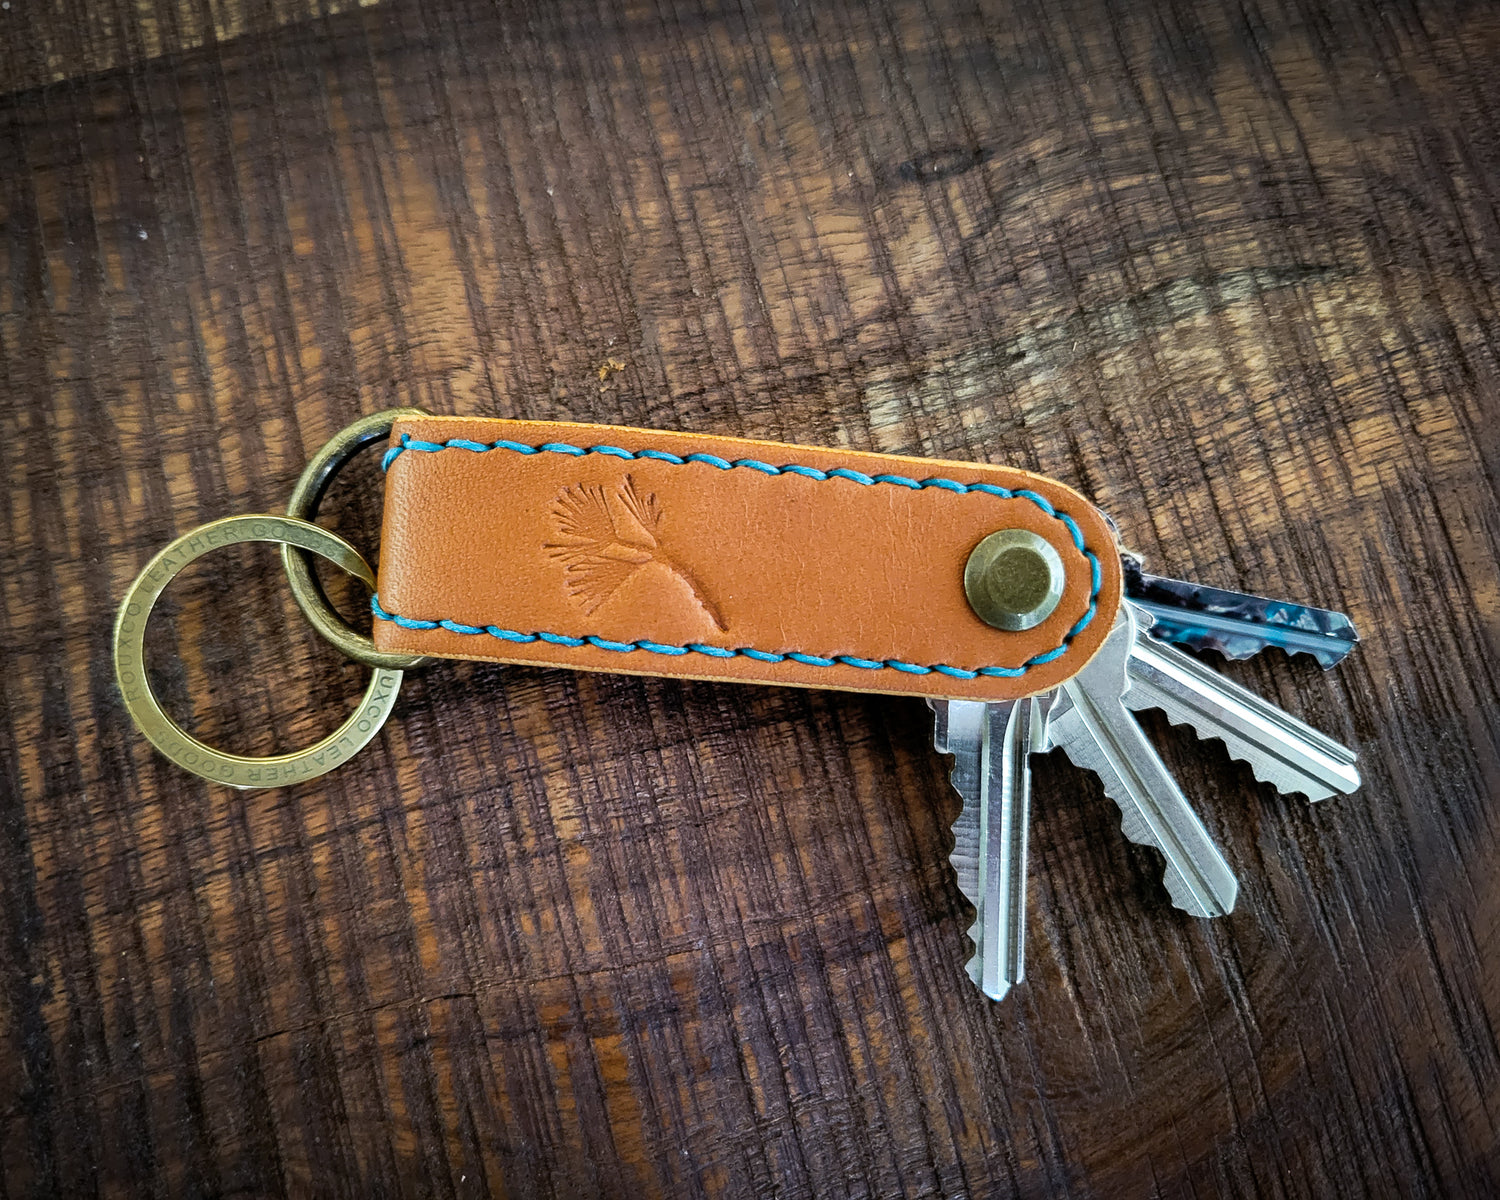 Tan Leather EDC Key Organizer stitched with turquoise thread holding 4 keys